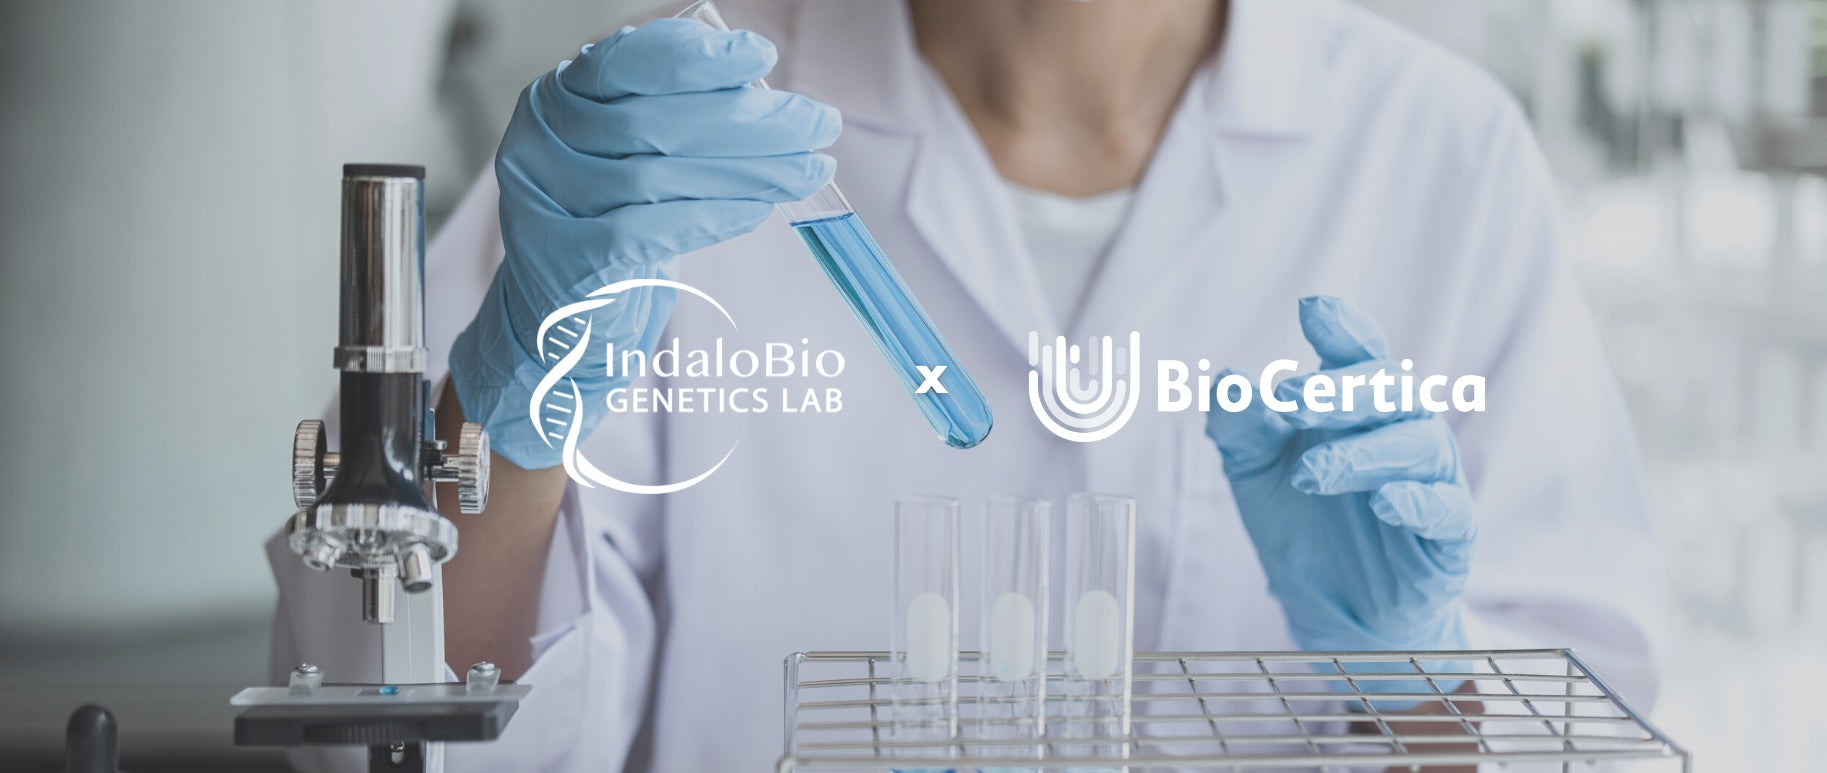 Indalo Bio Genetics lab and BioCertica have partnered